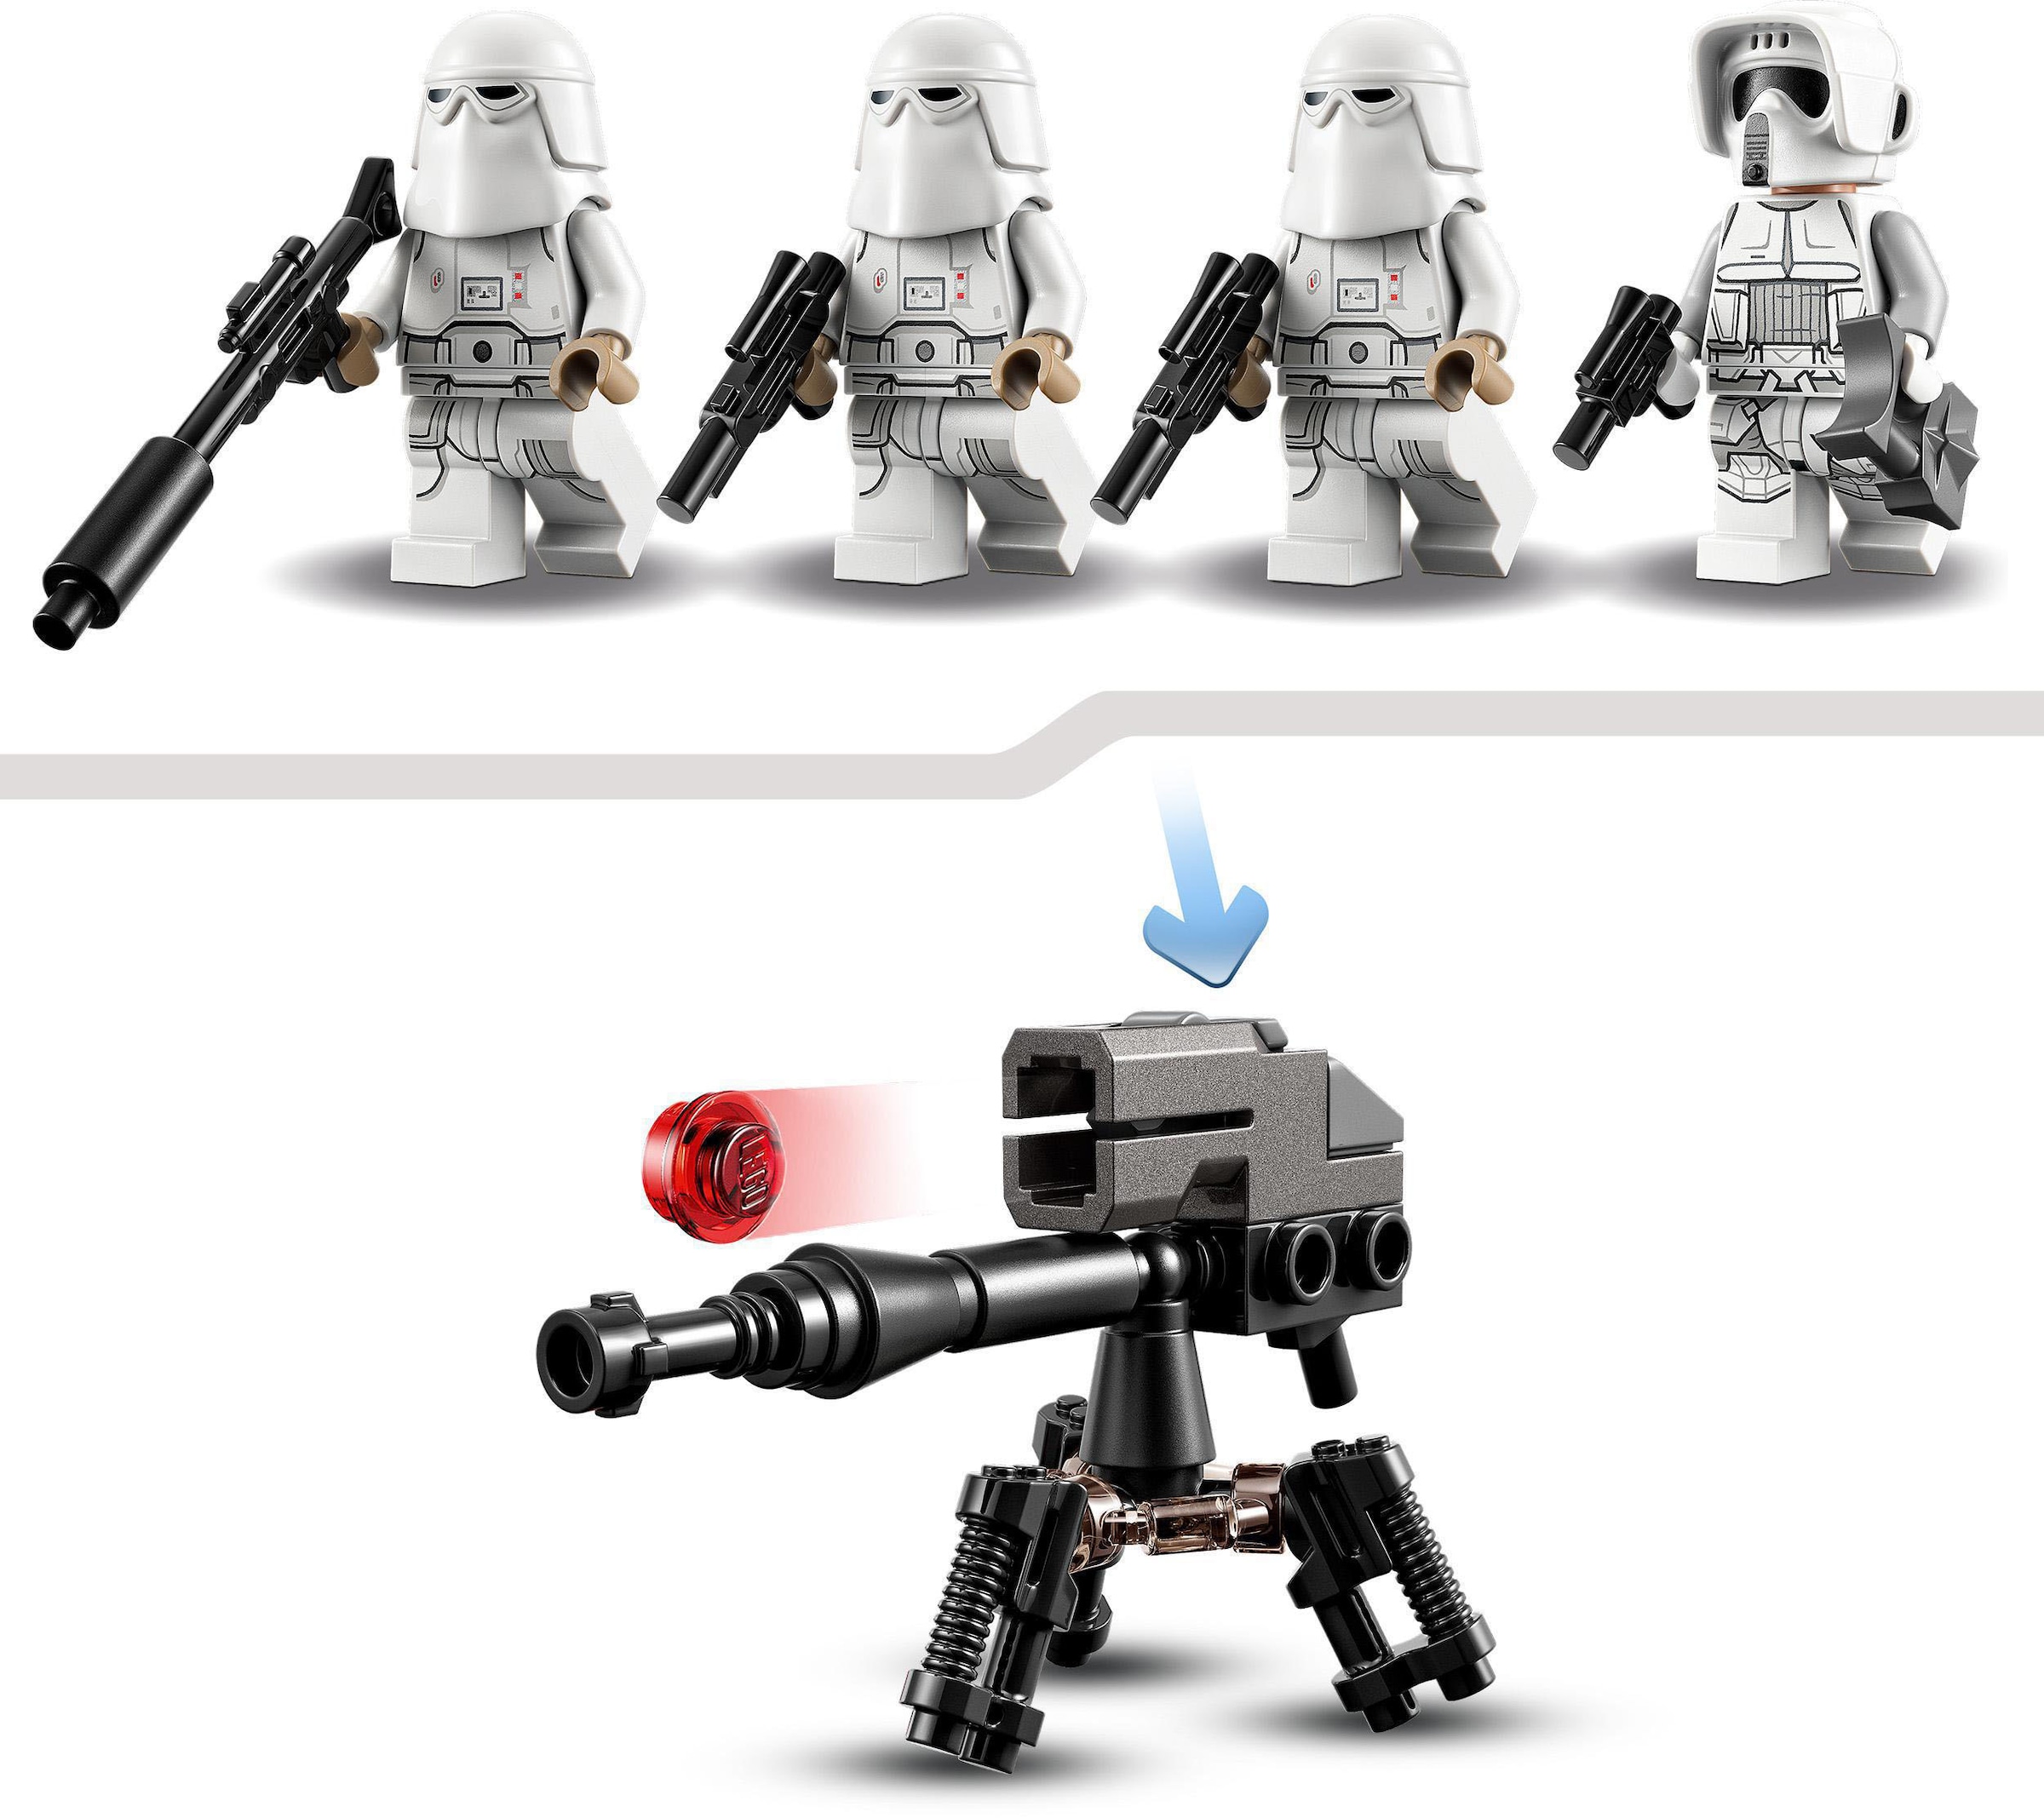 Lego Star Wars - Pack de Batalha - Snowtrooper - Ref 75320